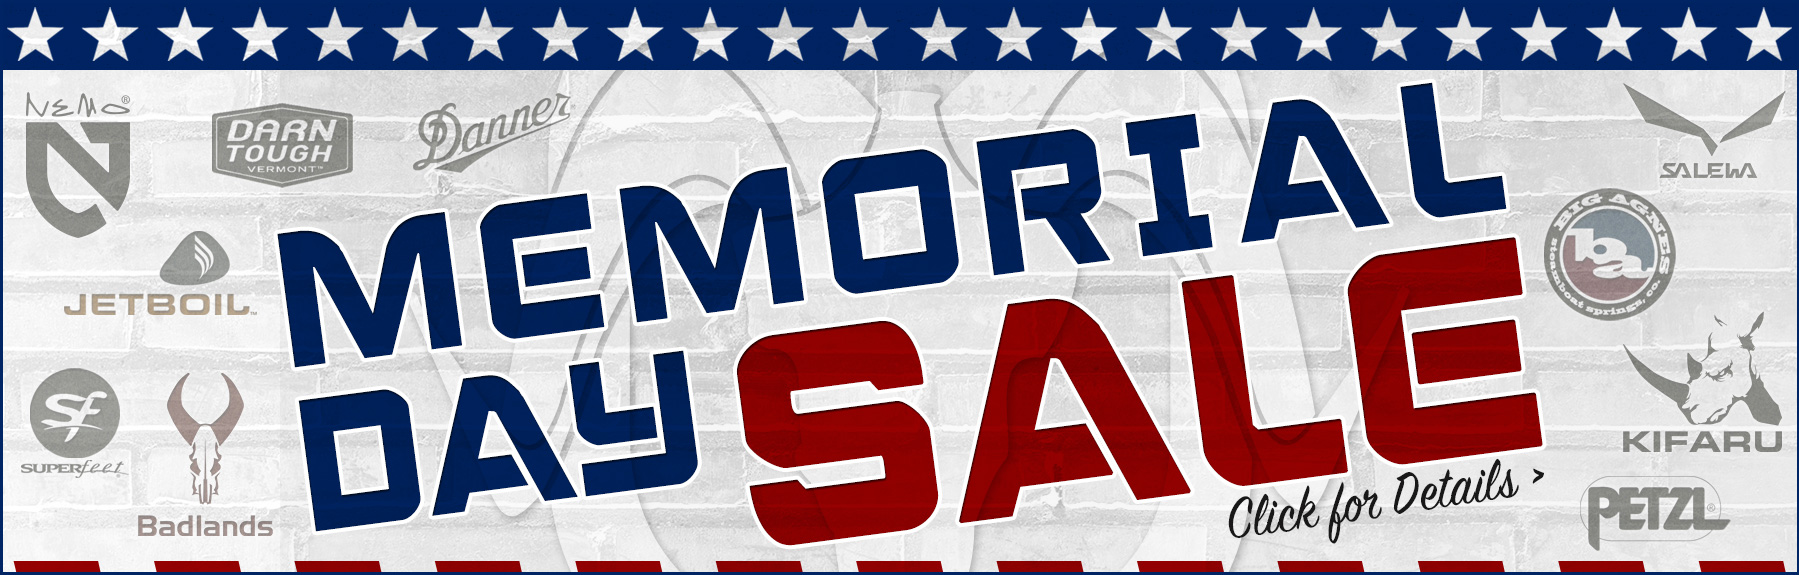 Save Big on Memorial Sales!